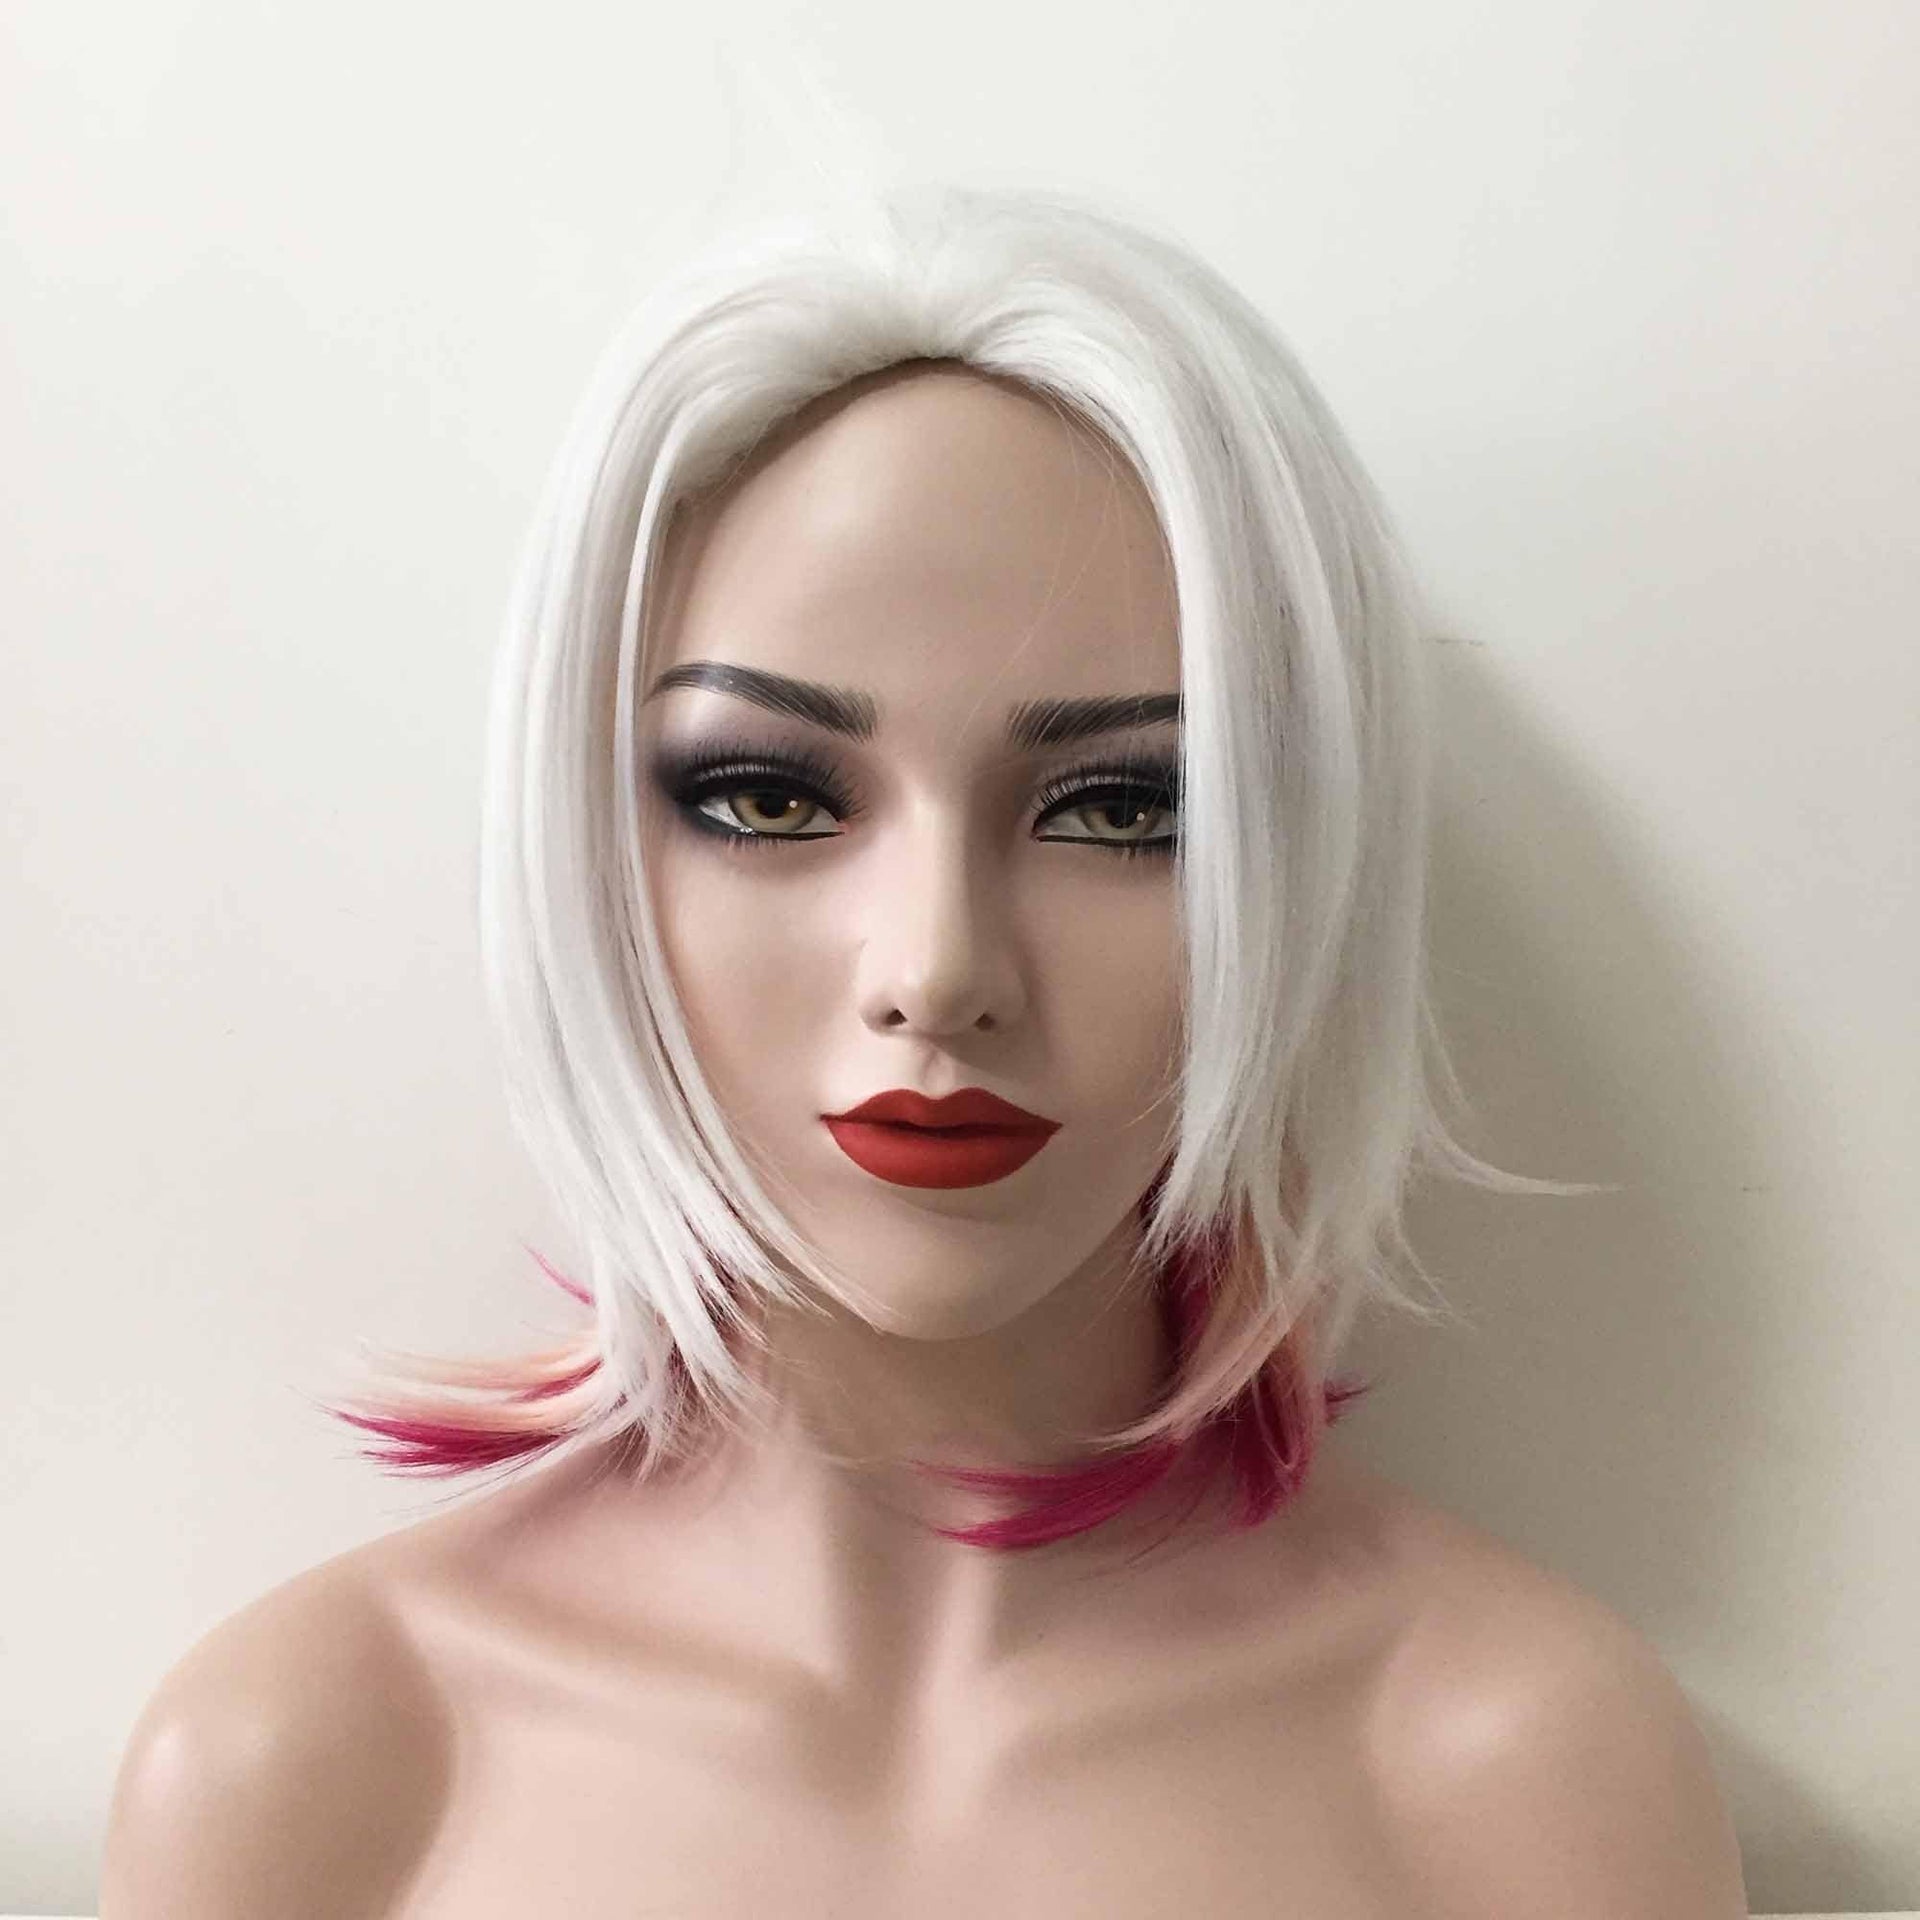 nevermindyrhead Women White Pink Medium Length Straight Slicked Back Layered Wig